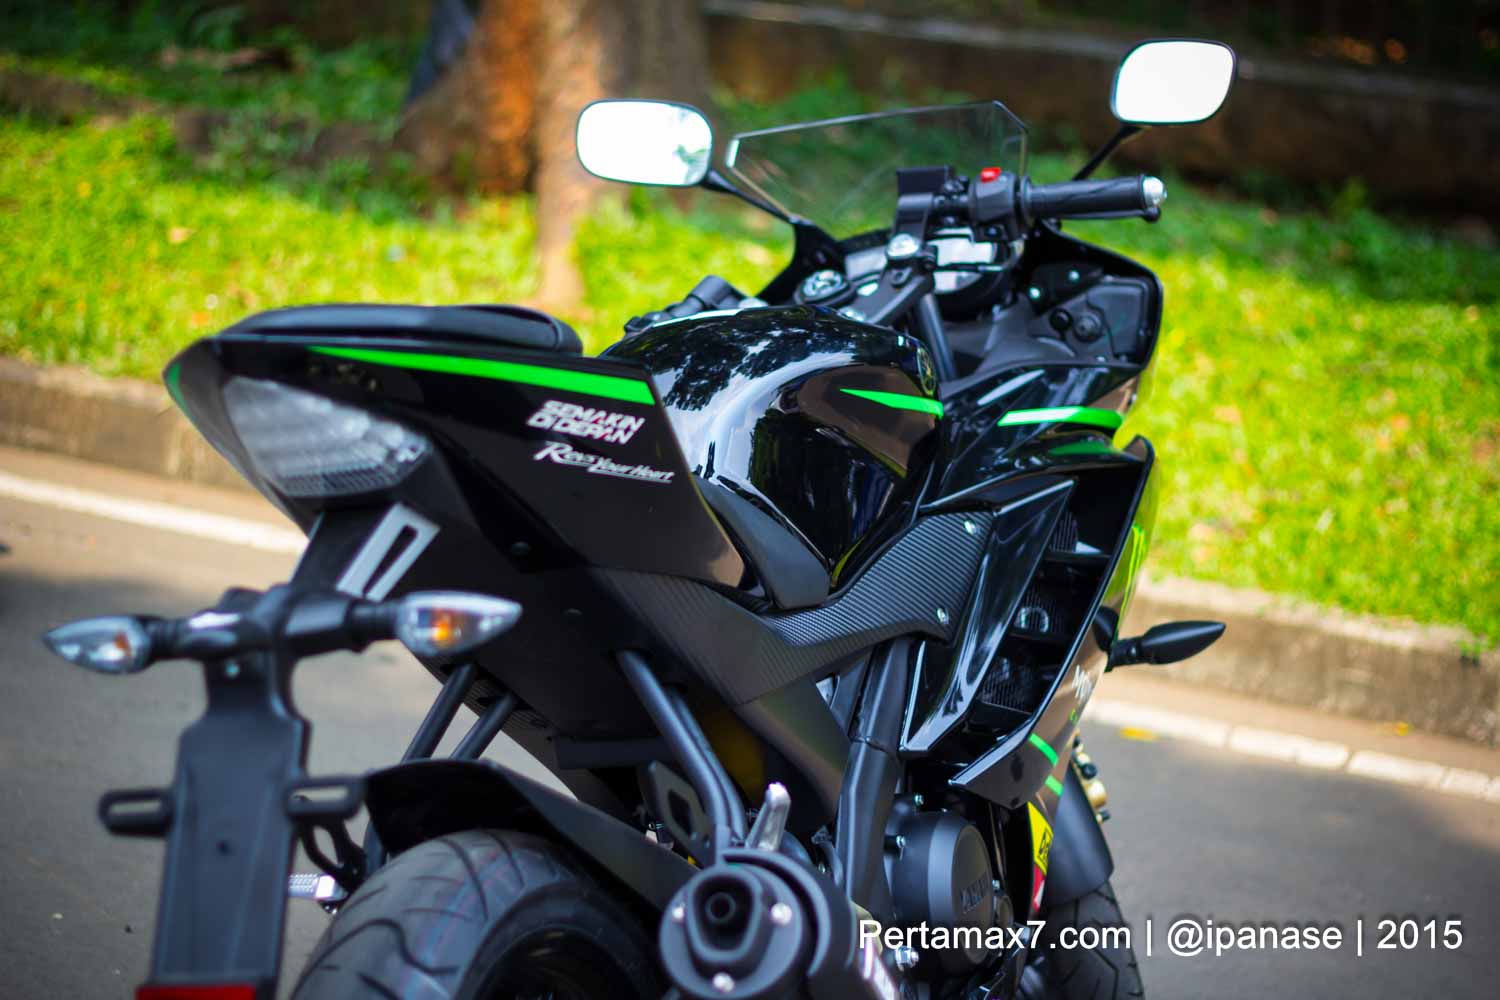 Foto Yamaha R15 Special Edition Tech3 Motogp Pertamax7com 12